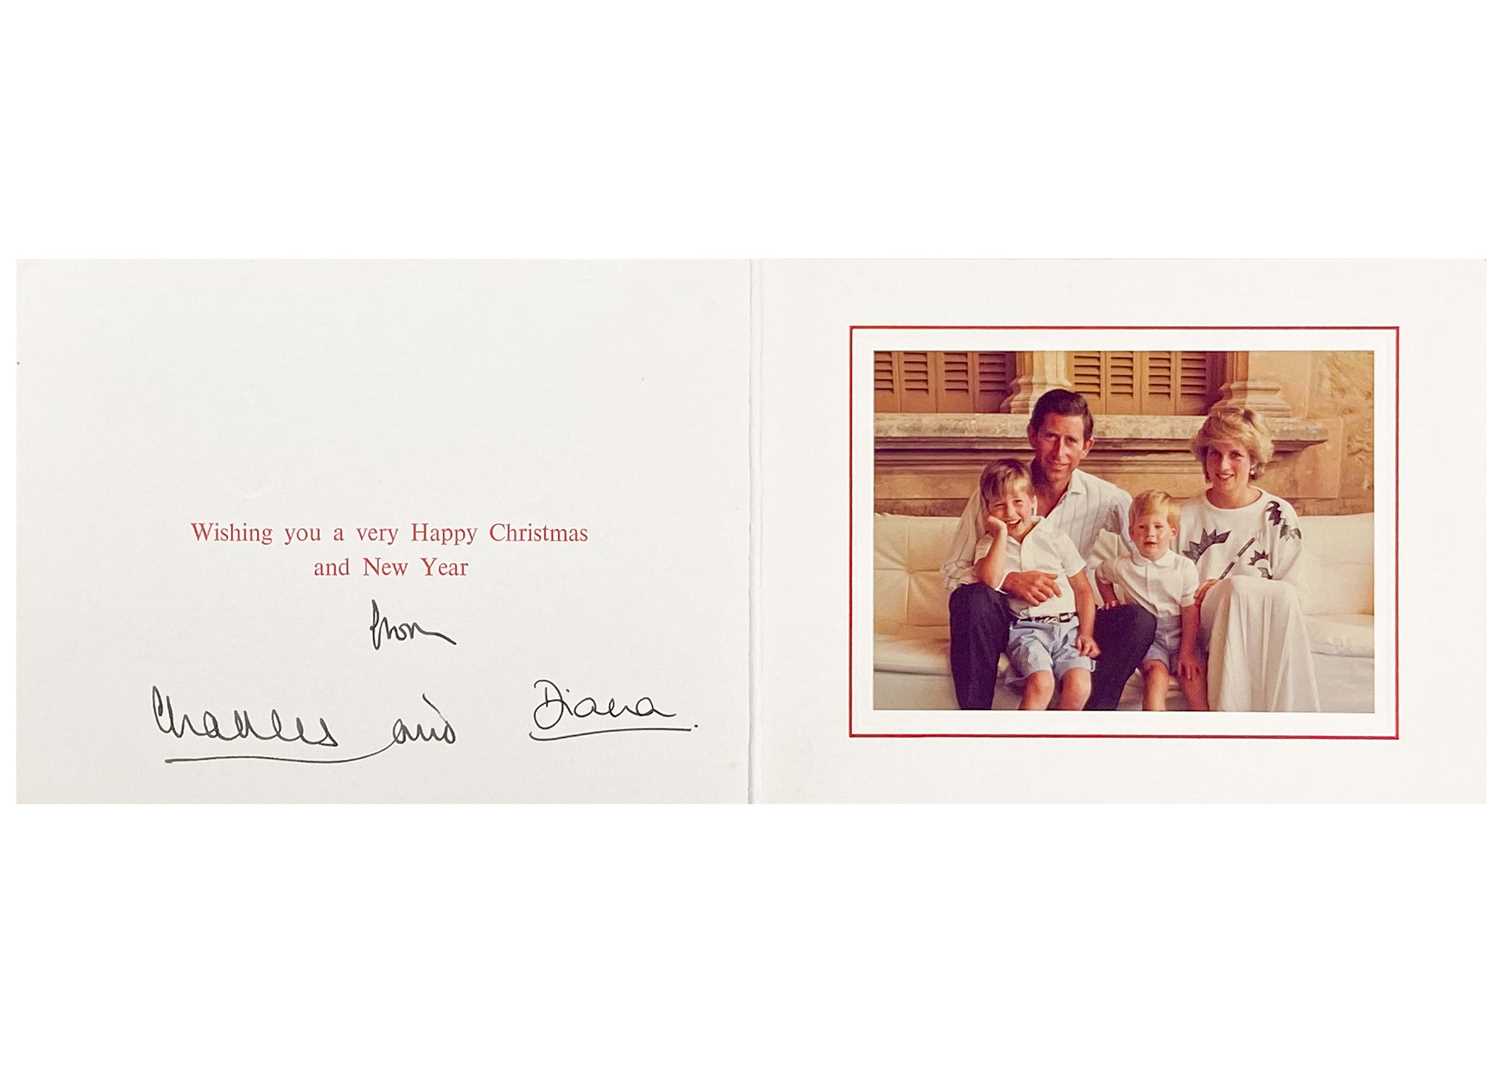 King Charles III, as The Prince of Wales & Diana, Princess of Wales, Royal Christmas card 1987 The